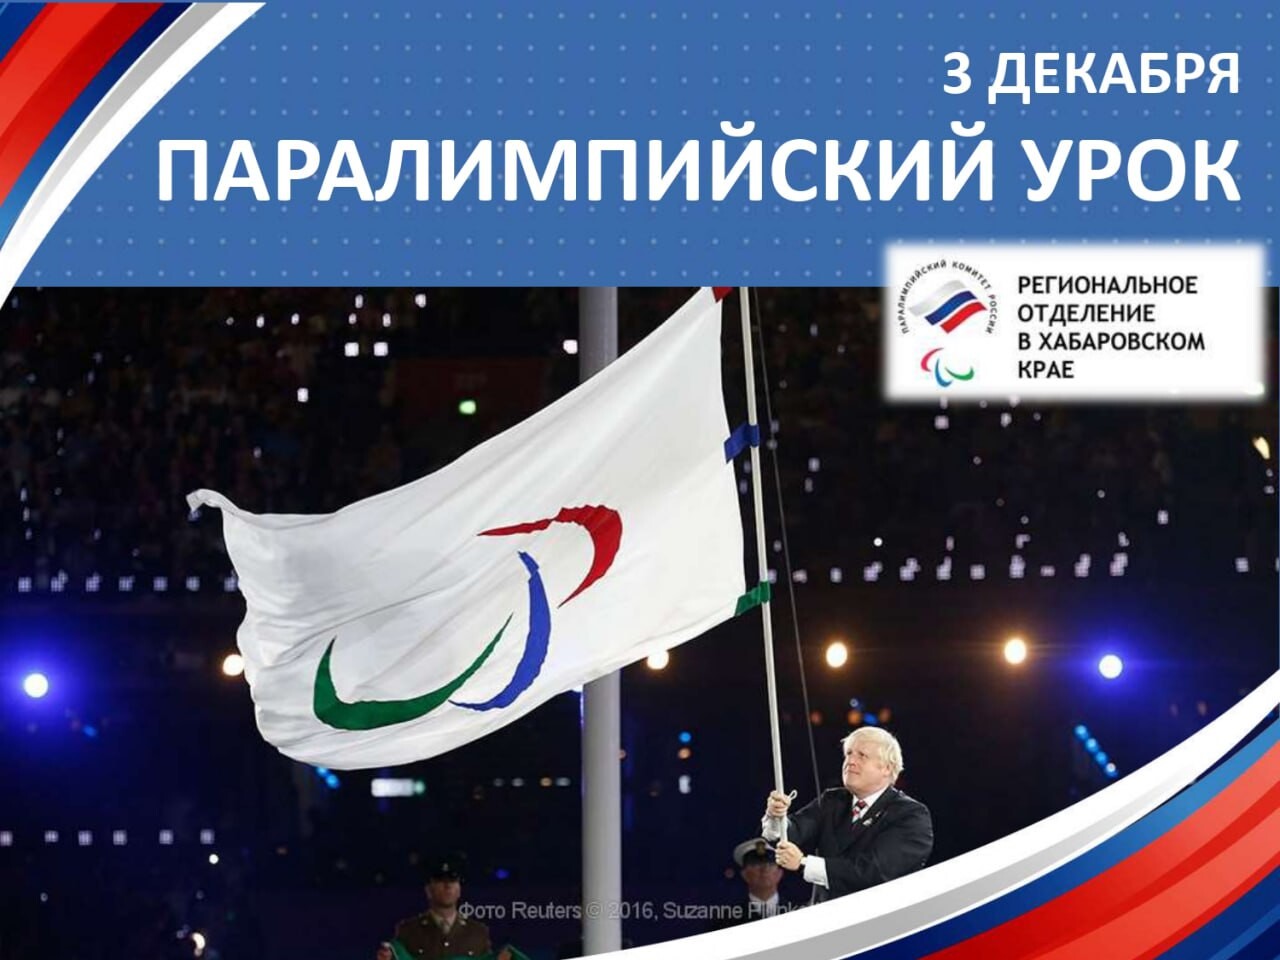 🏋️‍♀️ Паралимпийский урок в Хабаровске! 🏋️‍♂️